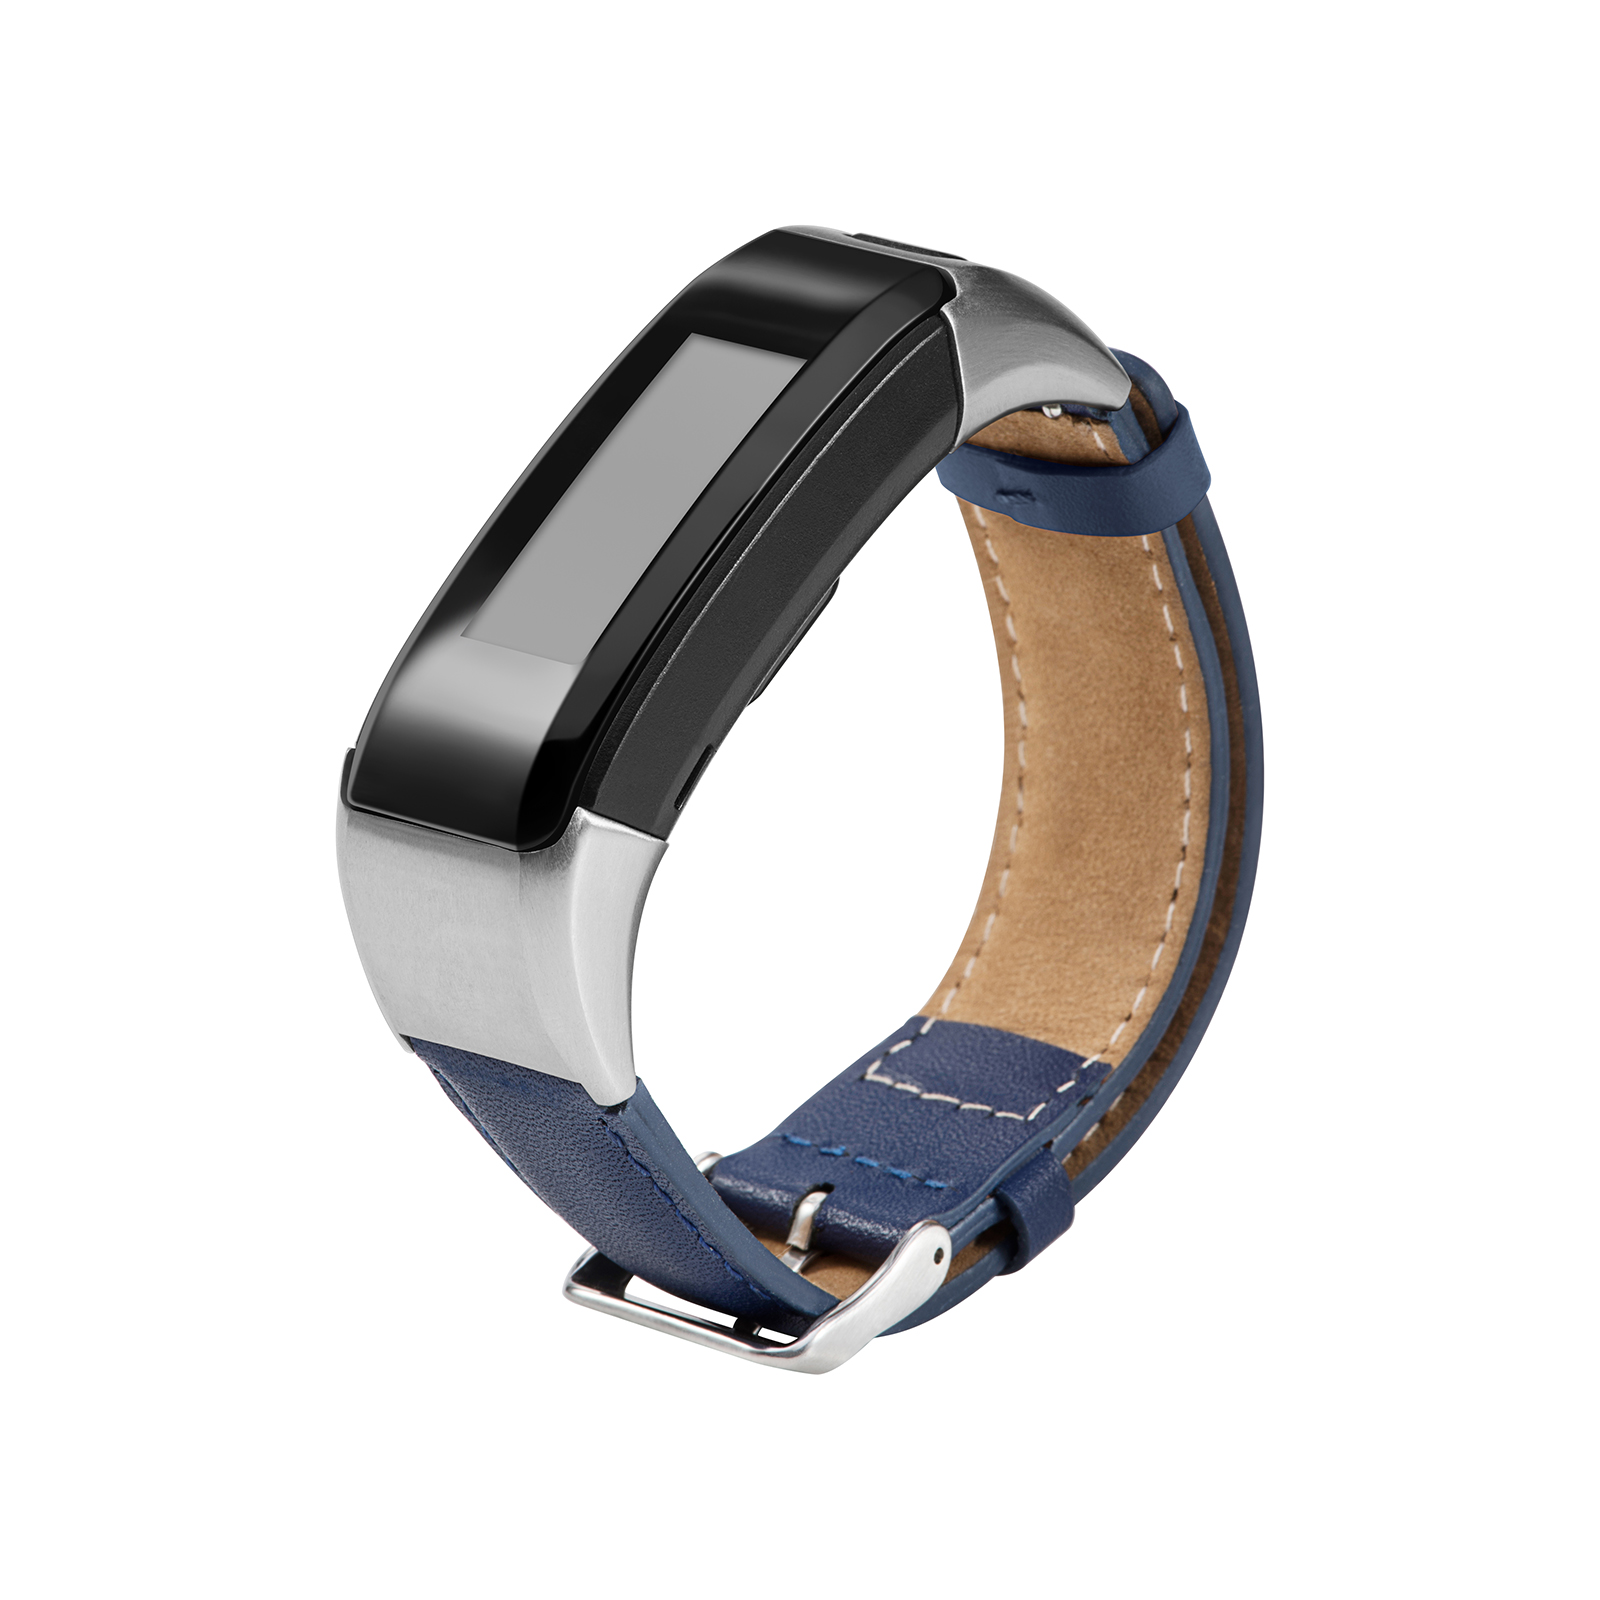 Bakeey-Retro-Metal-Buckle-Leather-Strap-Smart-Watch-Band-For-Garmin-Vivosmart-HR-1739351-11